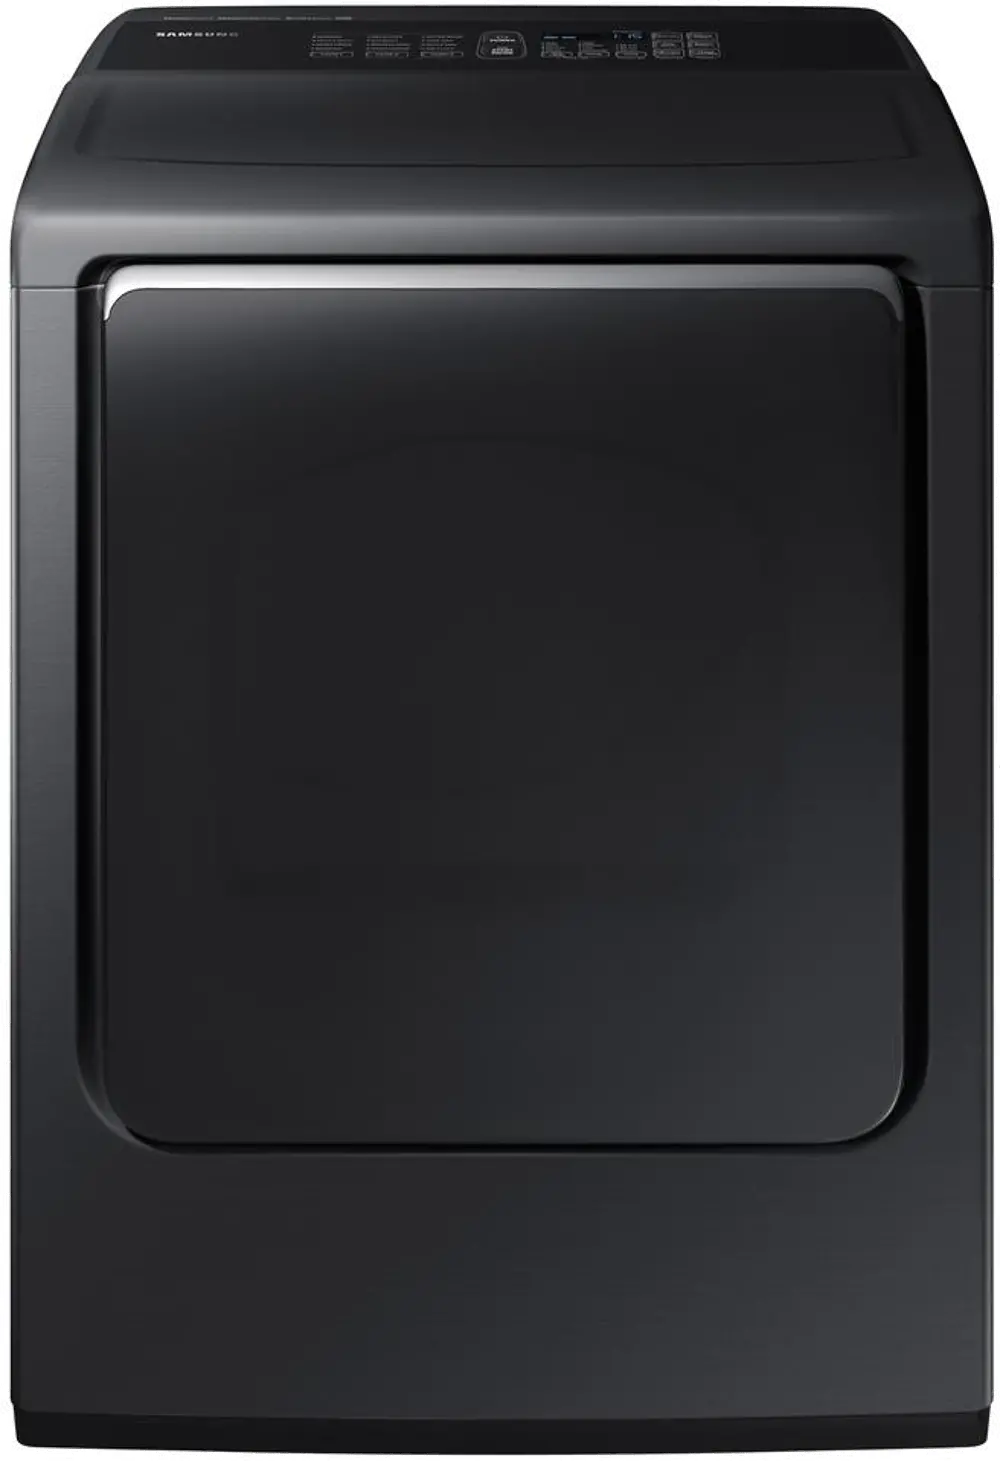 DVG52M8650V Samsung Gas Dryer with Multi-Steam Technology - 7.4 cu. ft. Black-1